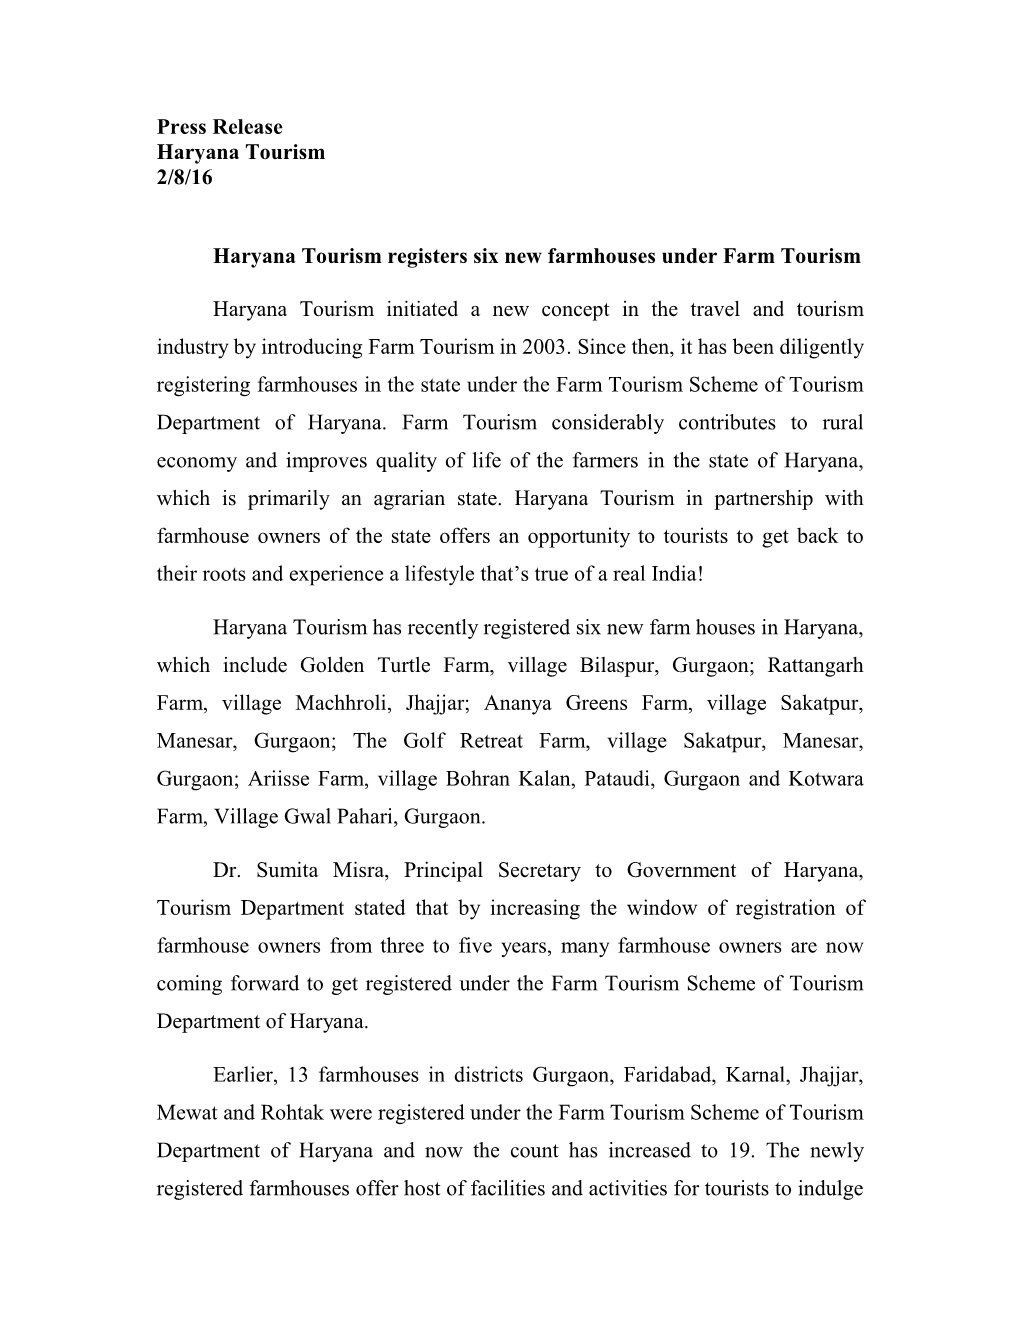 Press Release Haryana Tourism 2/8/16 Haryana Tourism Registers